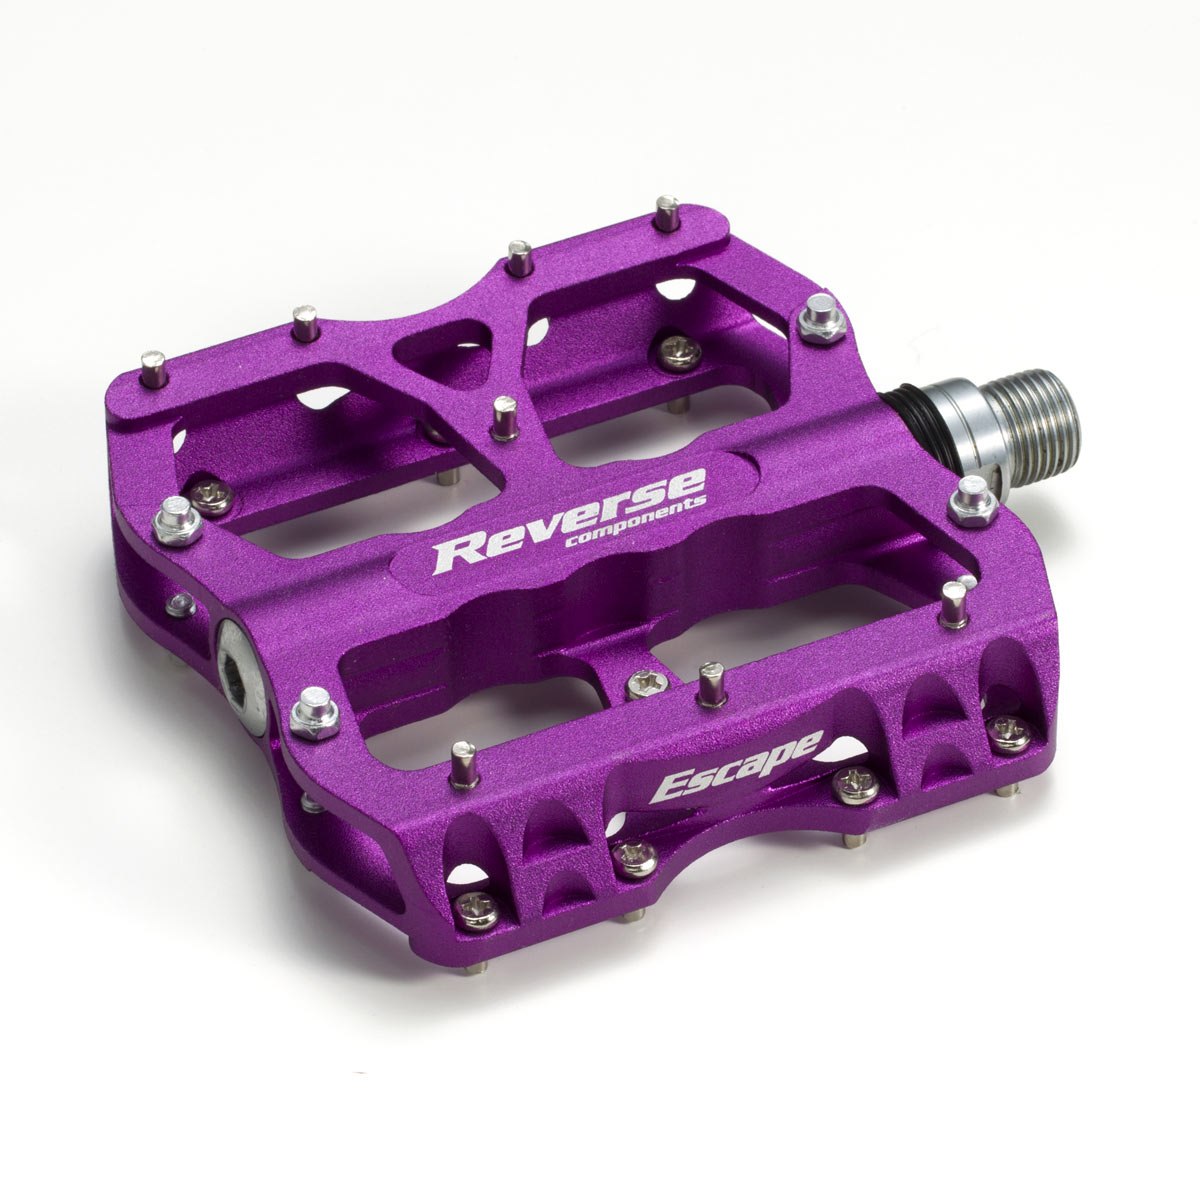 Picture of Reverse Components Escape Pedals - purple sandblast